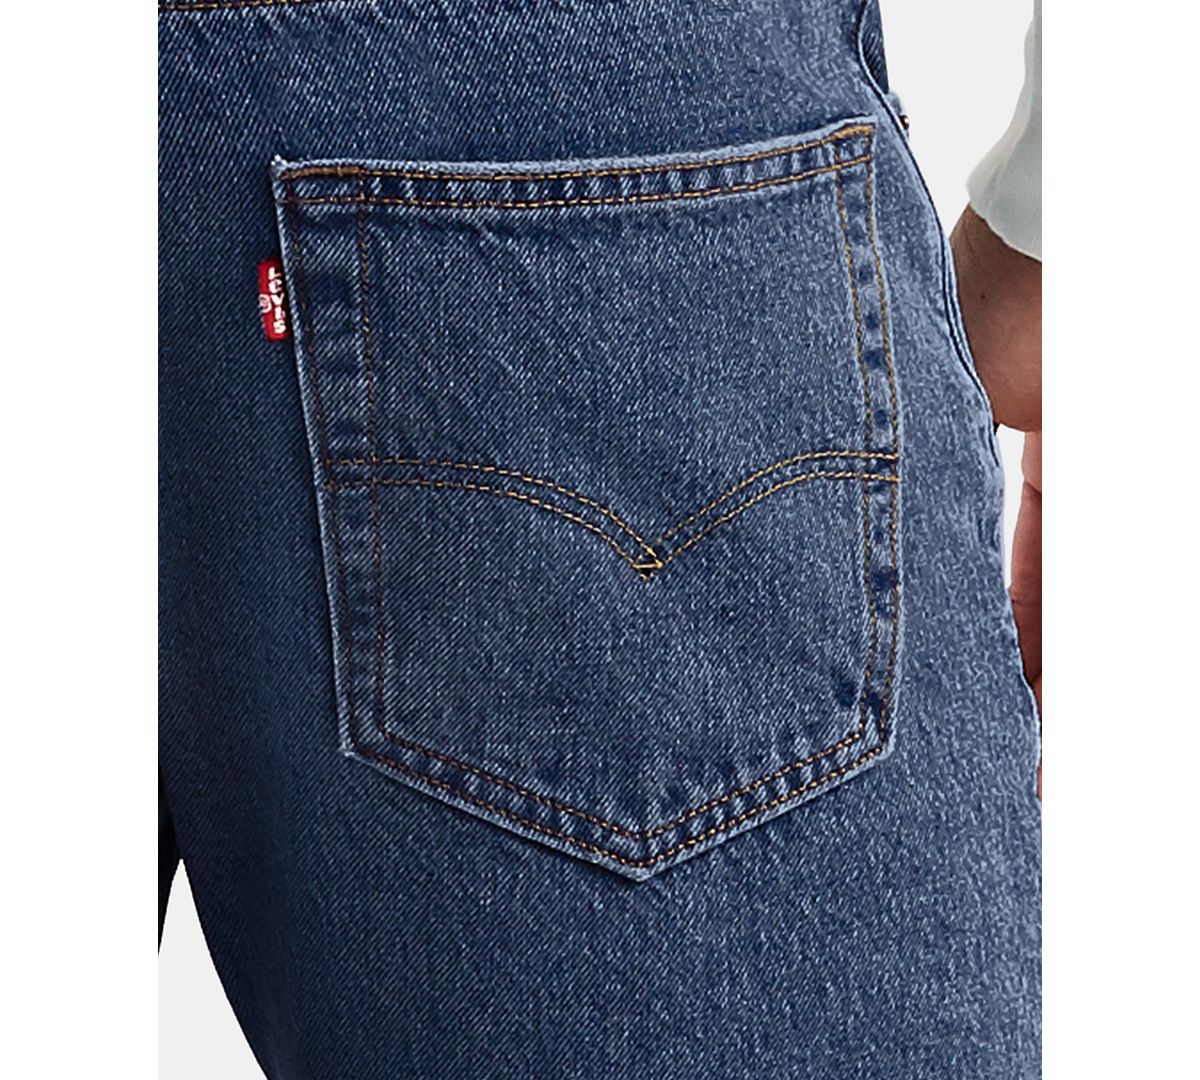 Levi's 502™ Taper Jeans Pauper Stone Tencel